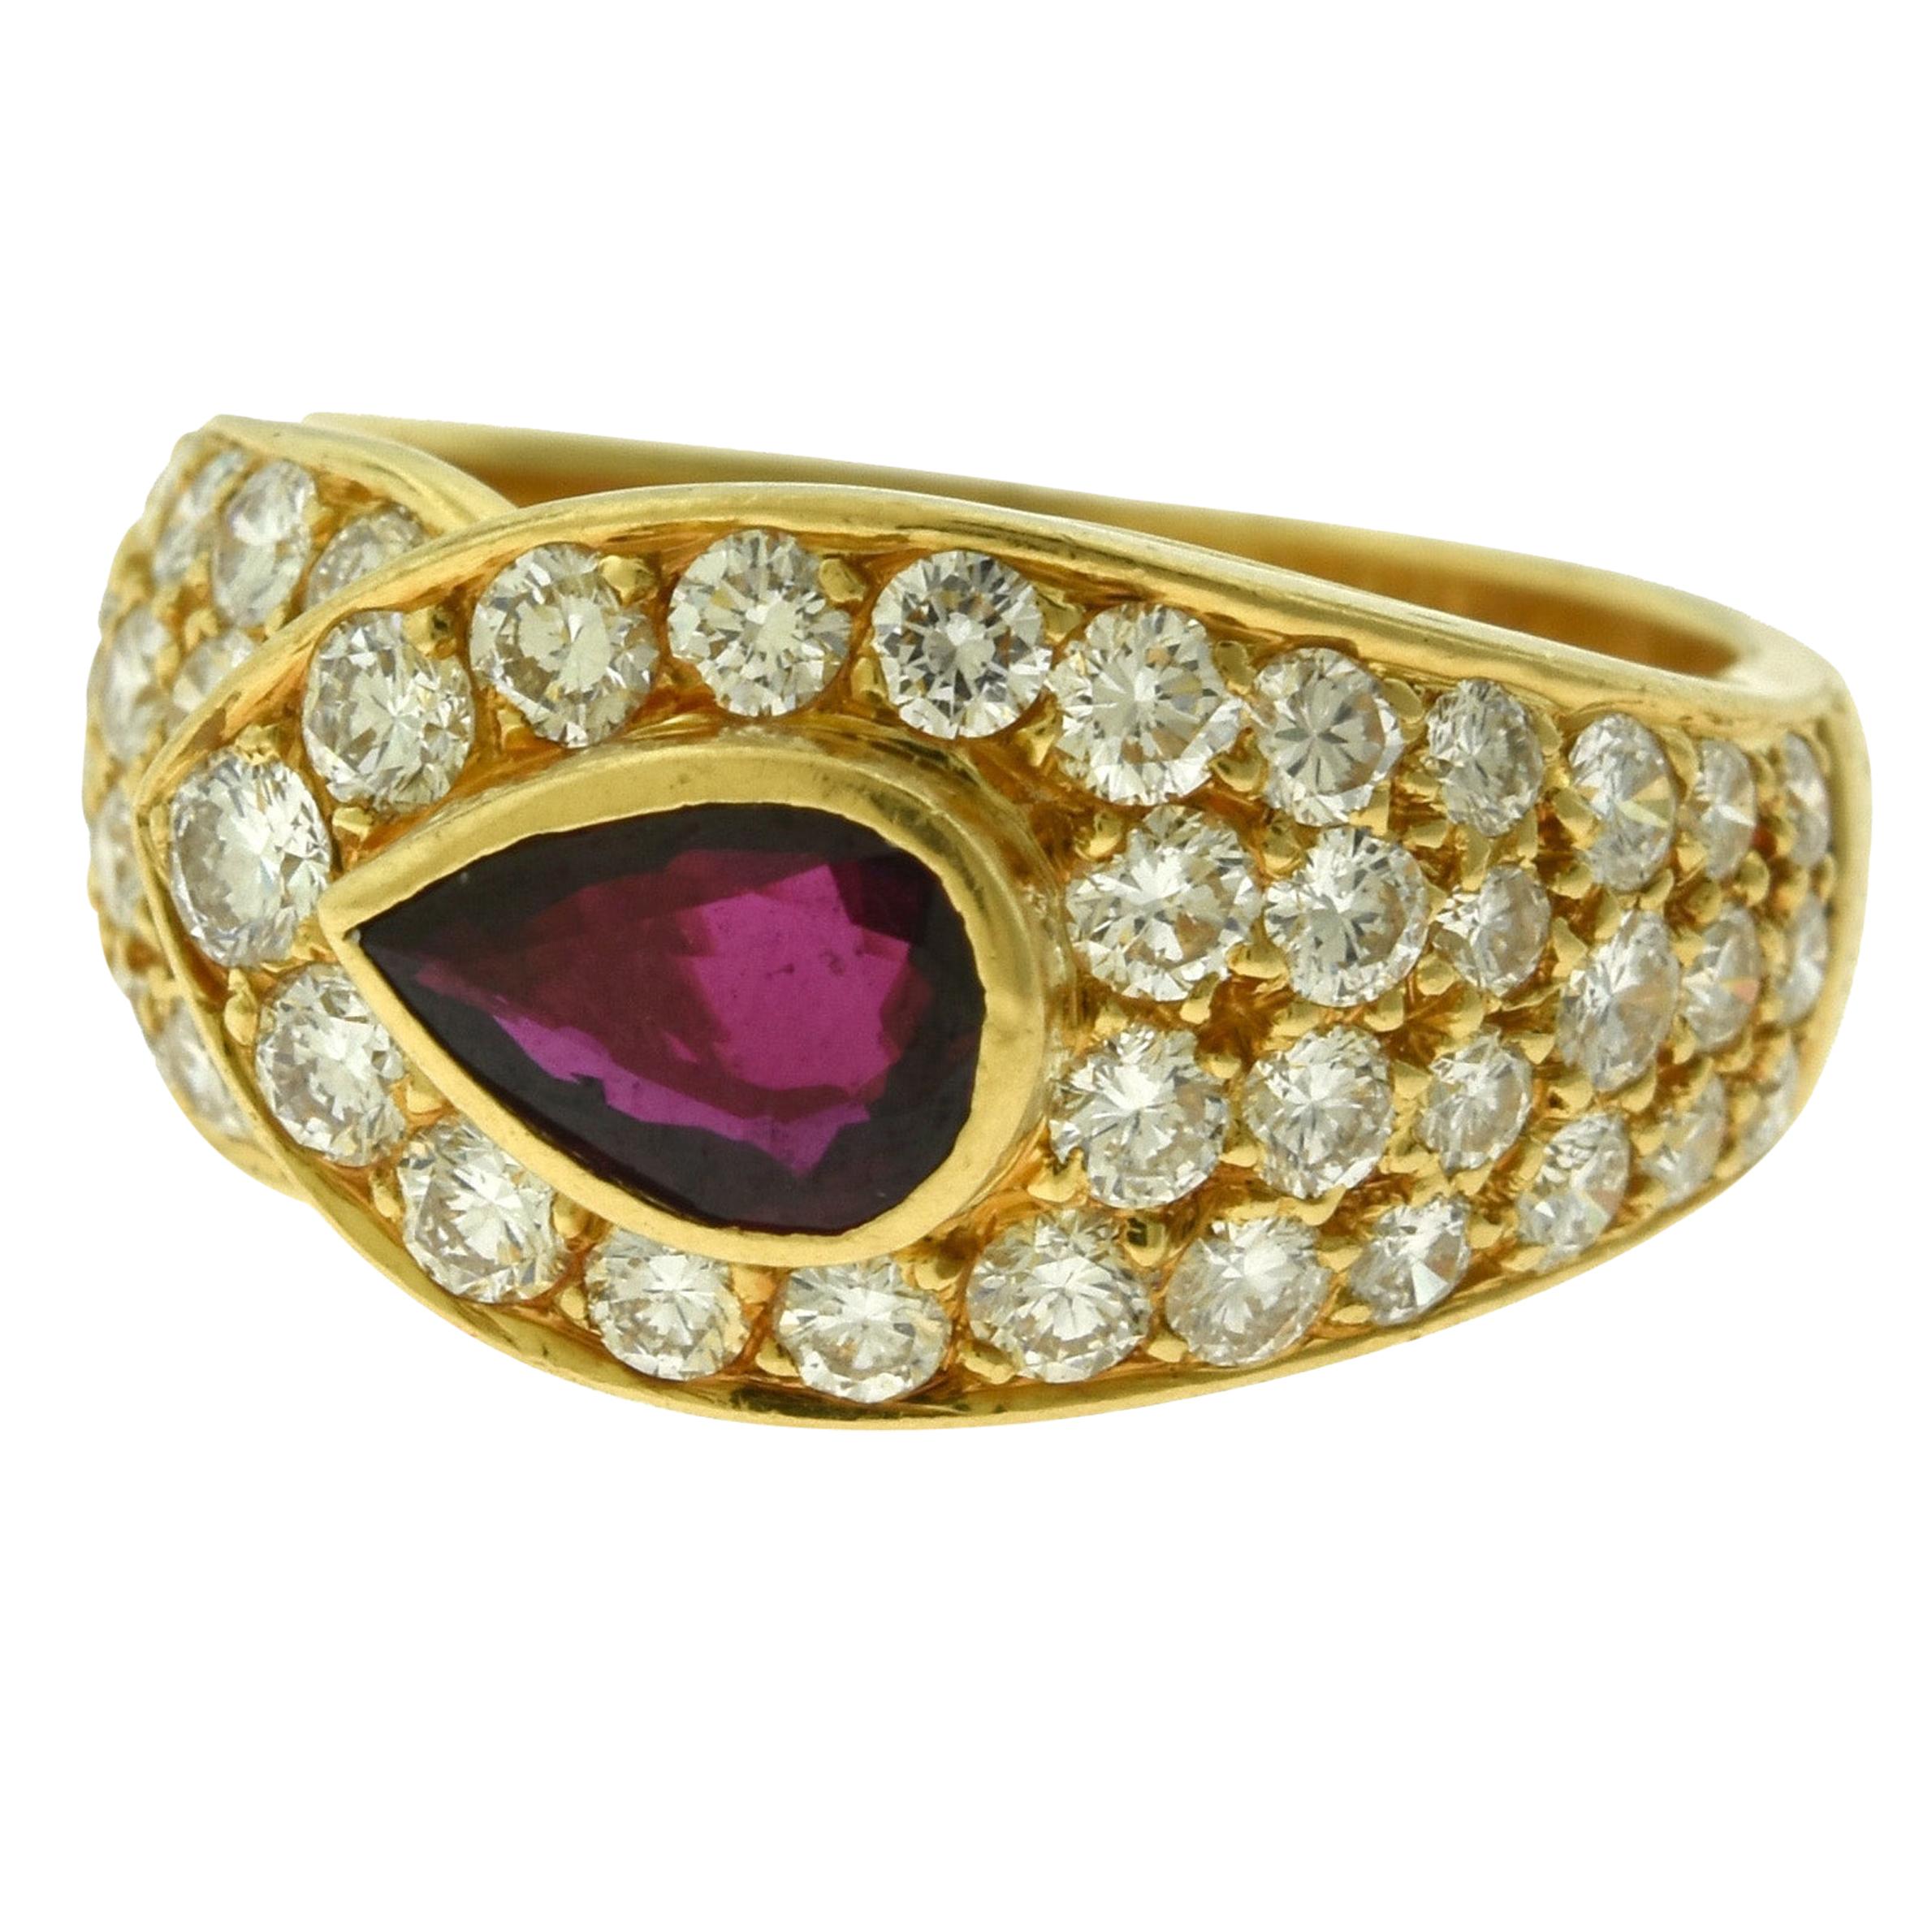  Van Cleef & Arpels Pear Shape Ruby and Diamond 18 Karat Yellow Gold Ring